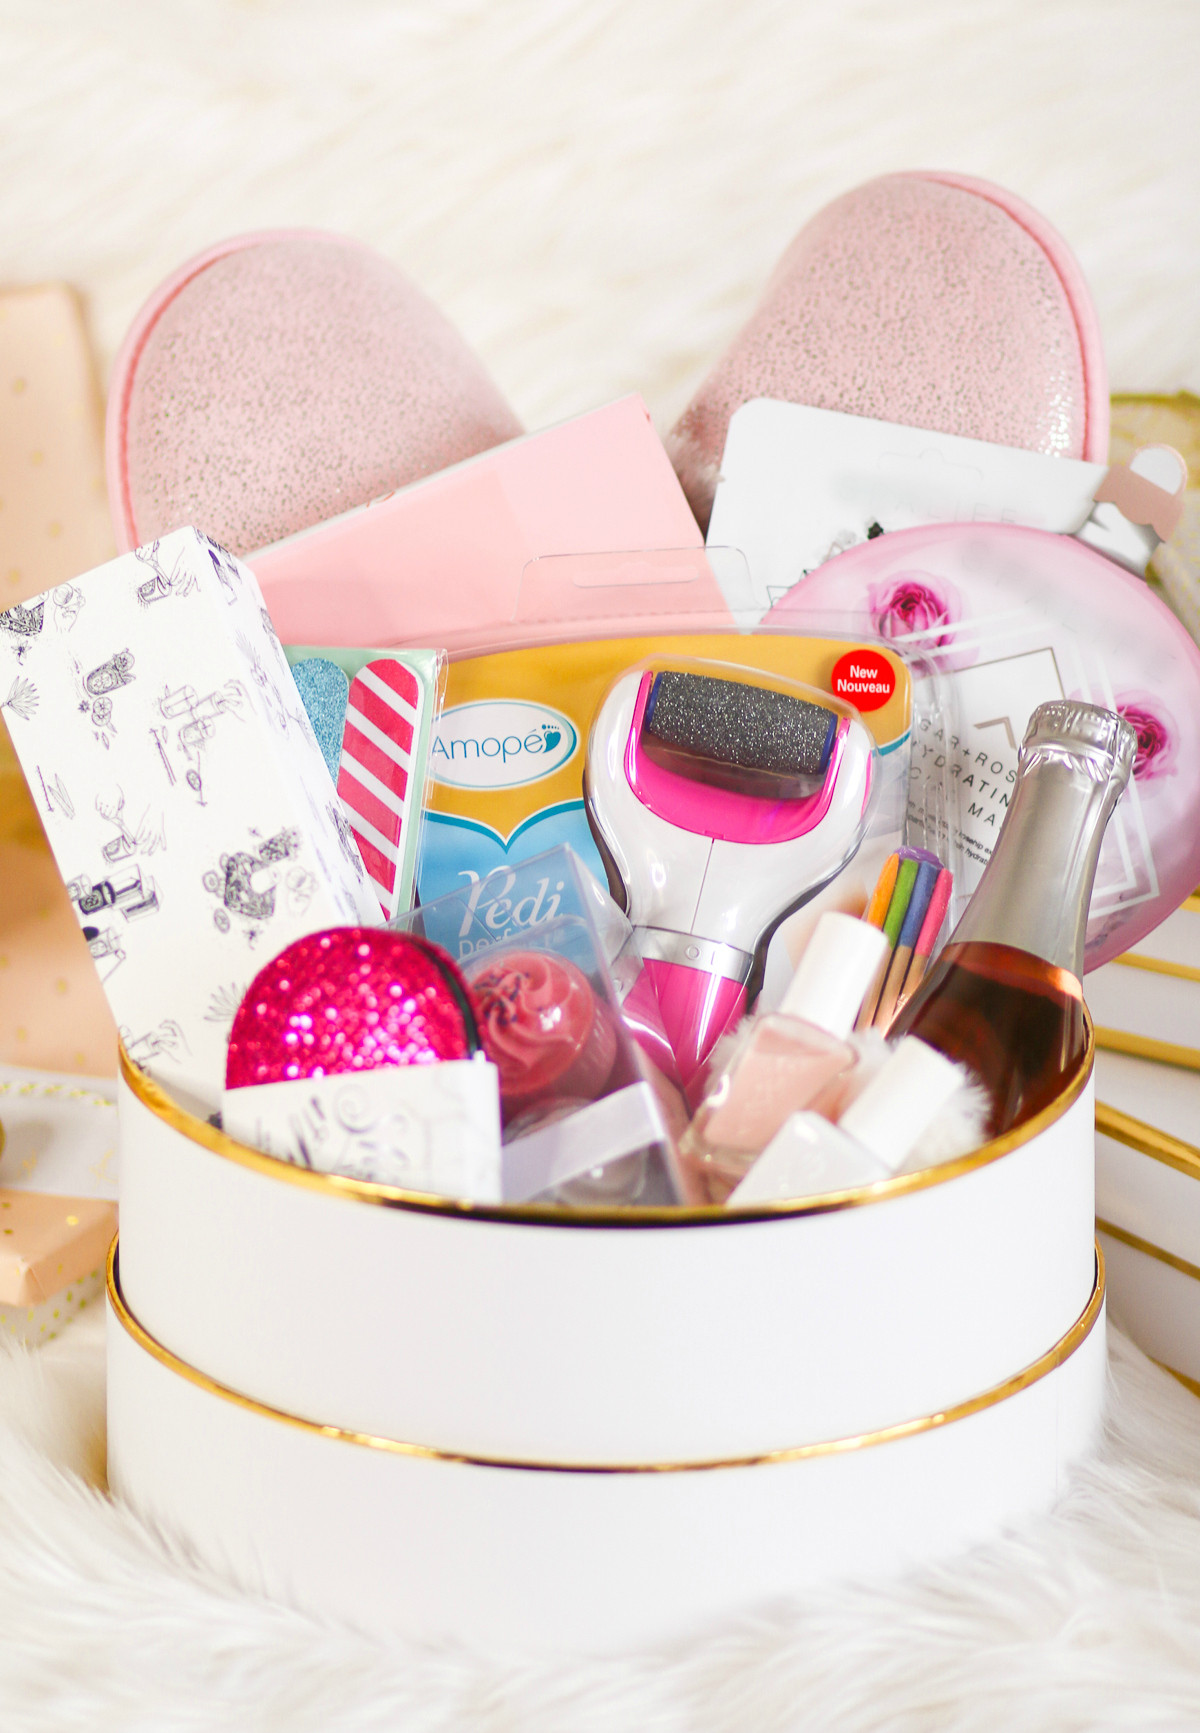 Spa Gift Baskets Ideas
 DIY Spa Gift Basket 12 Self Care Gift Ideas She’ll Love